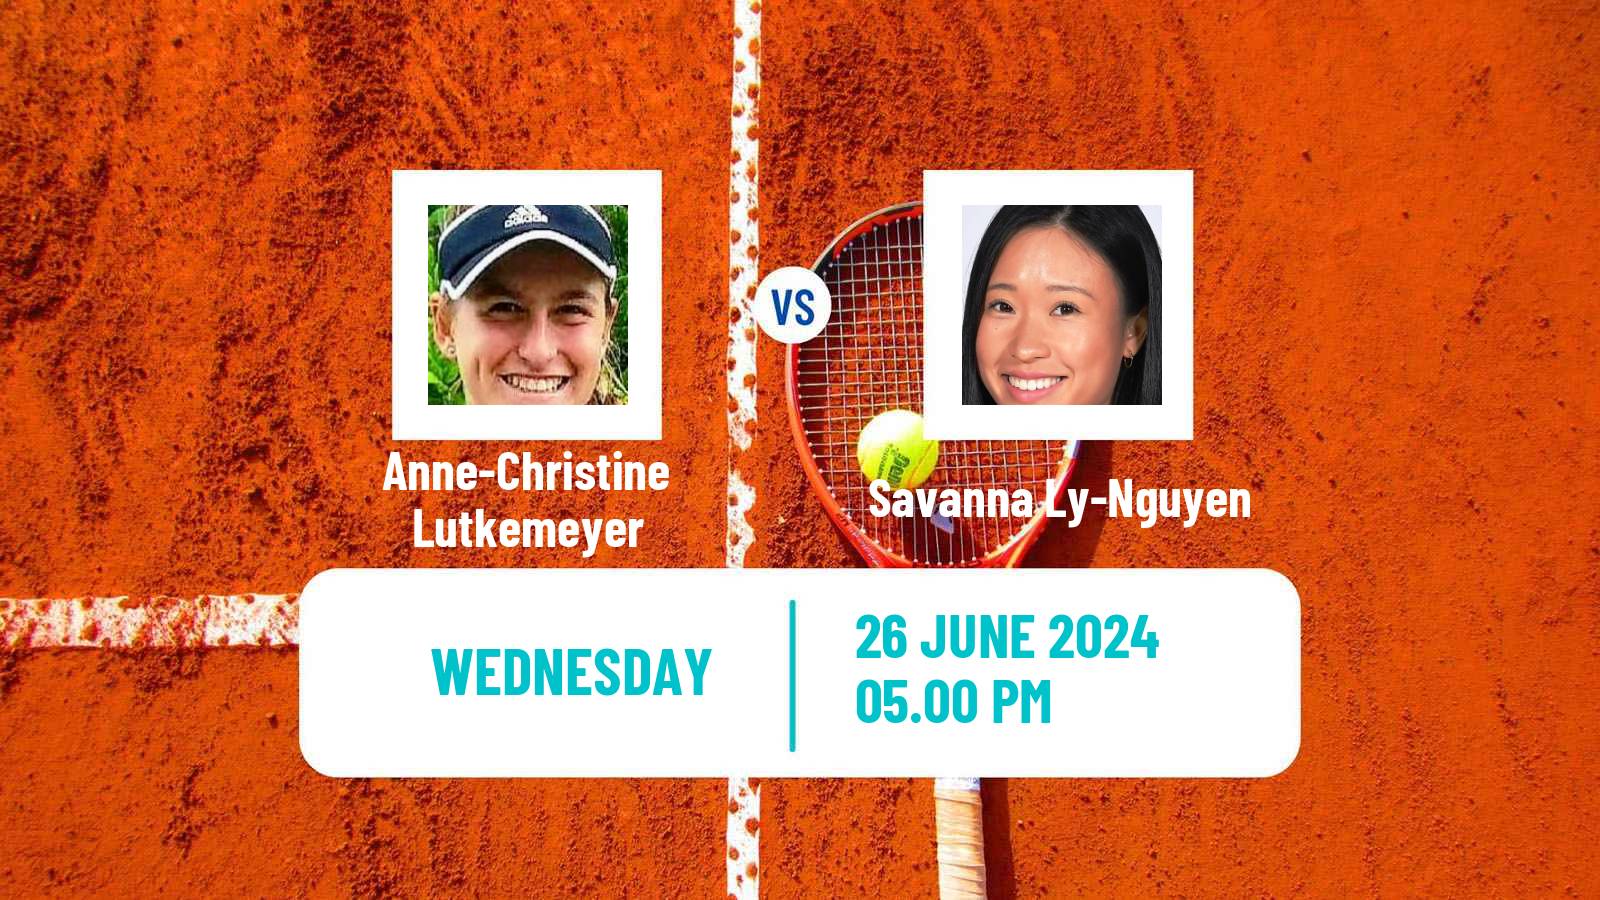 Tennis ITF W15 Los Angeles Ca Women Anne-Christine Lutkemeyer - Savanna Ly-Nguyen